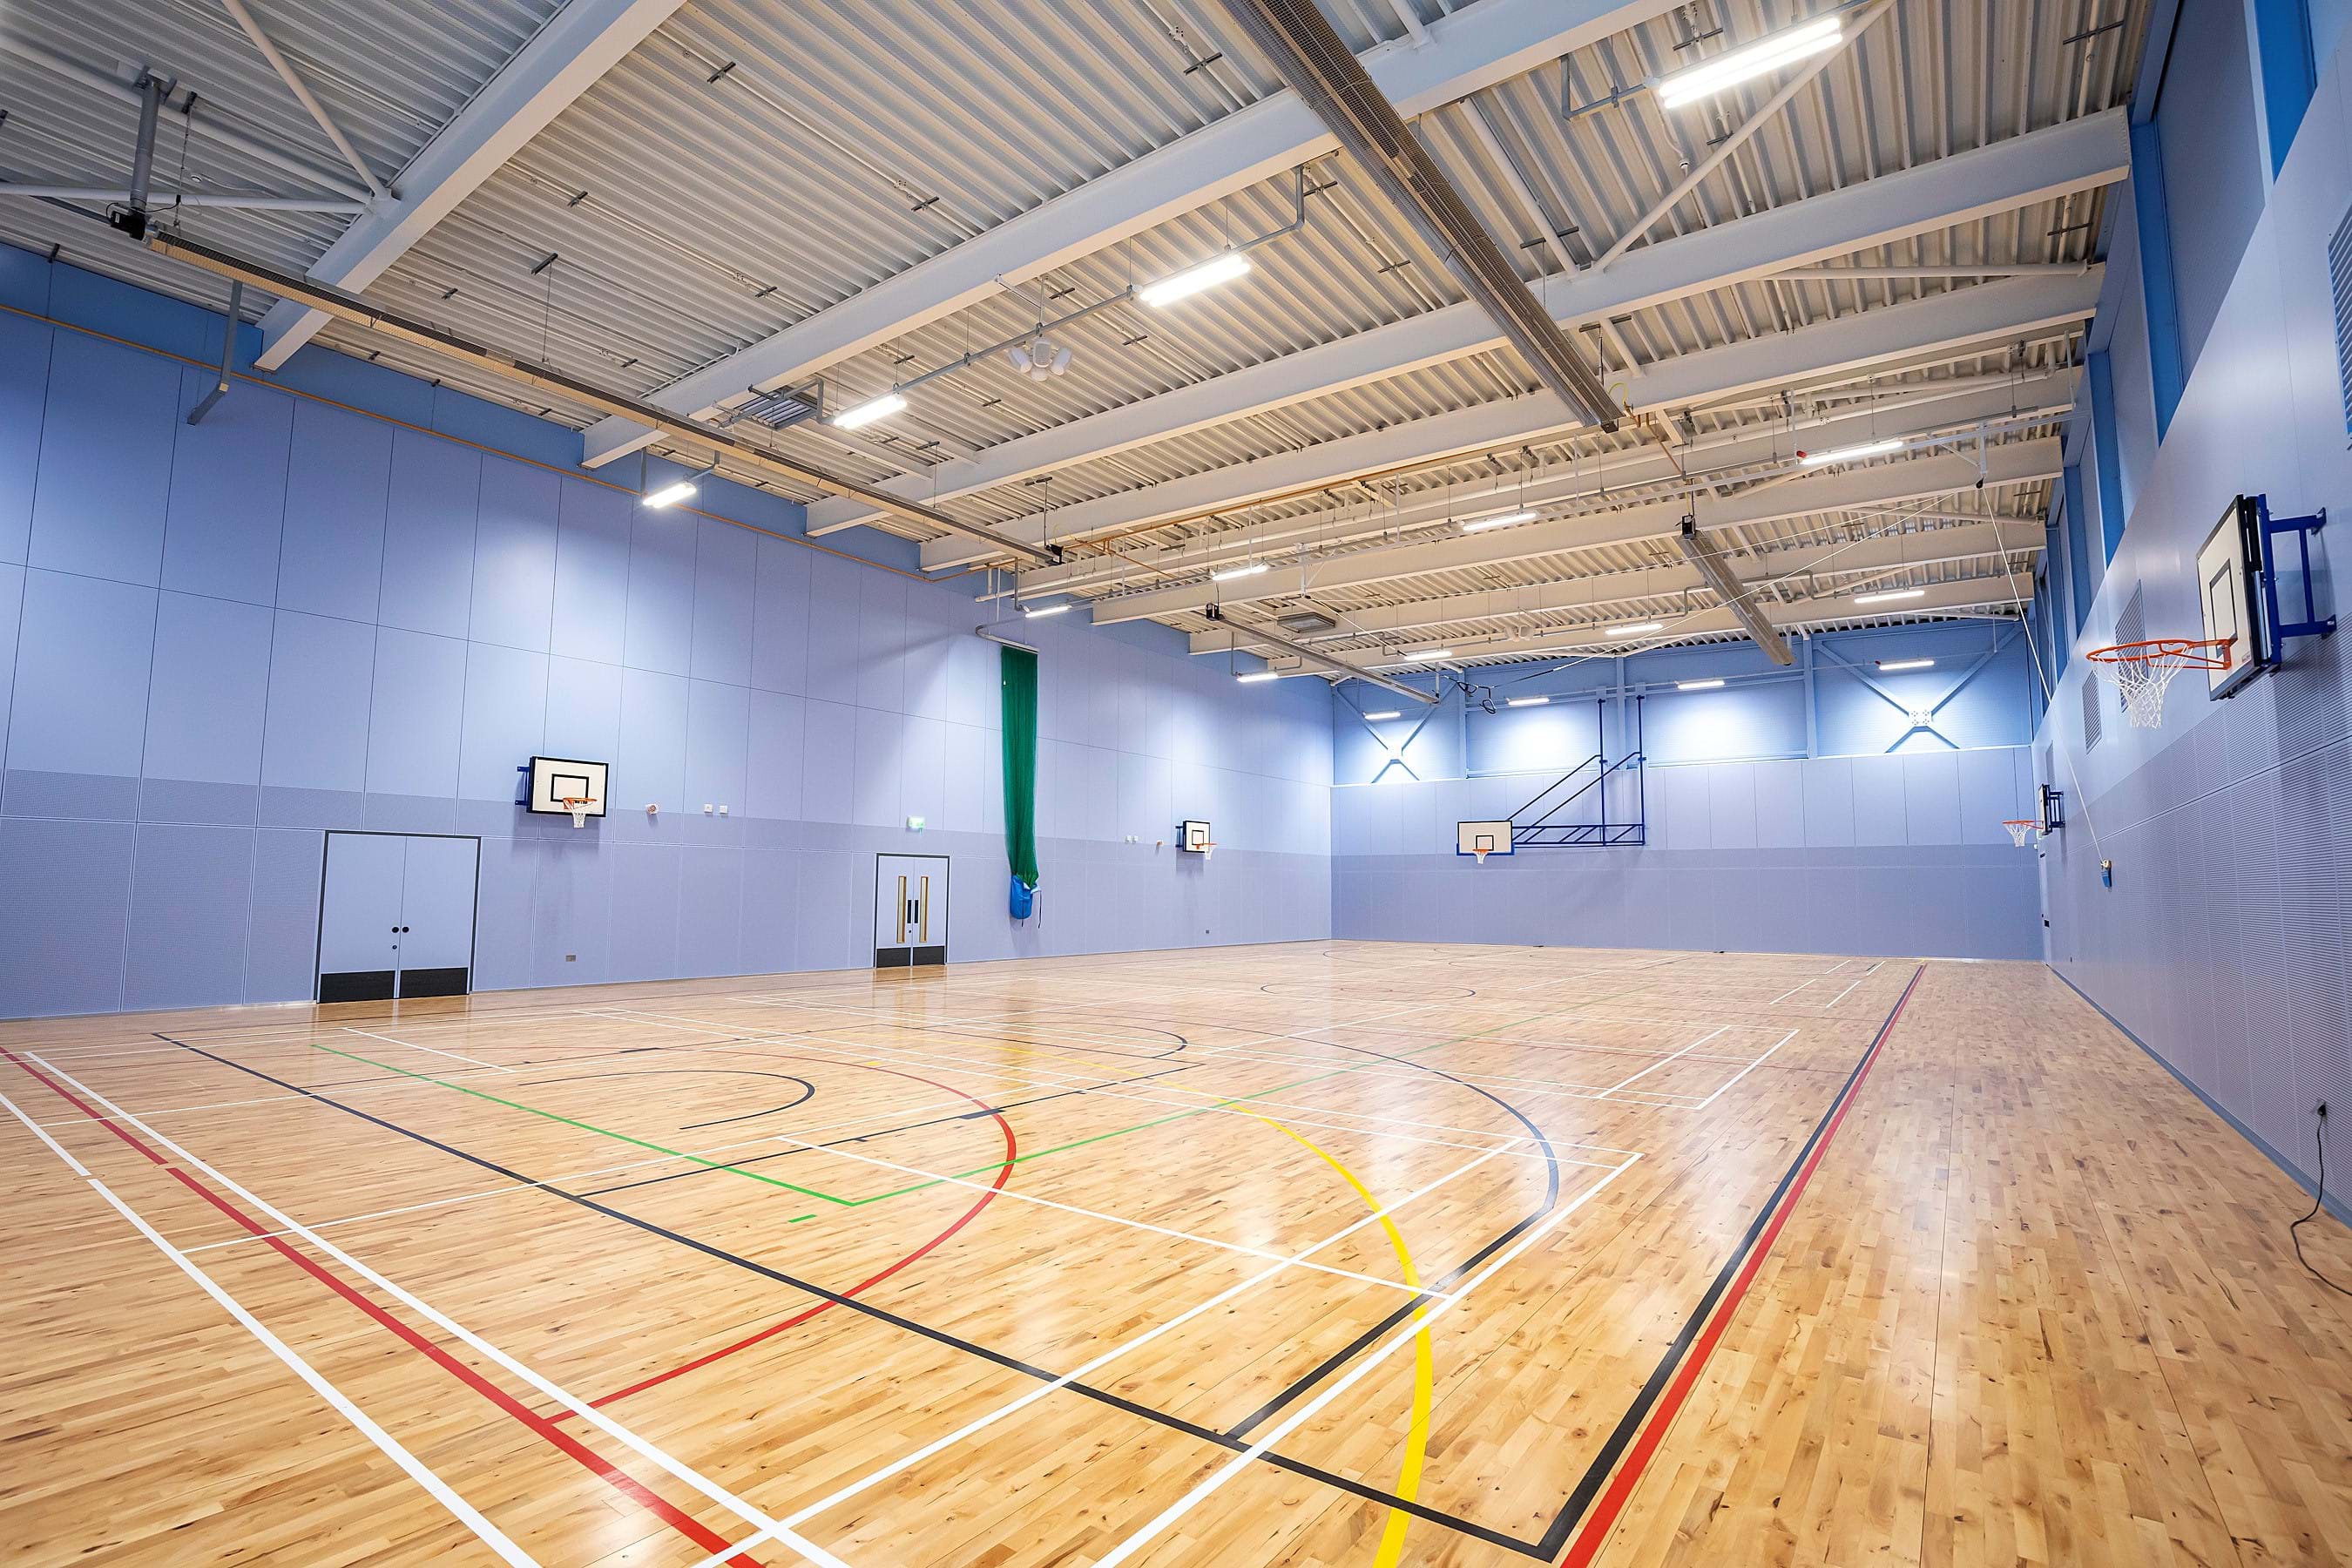 Bulmershe Leisure Centre sports hall